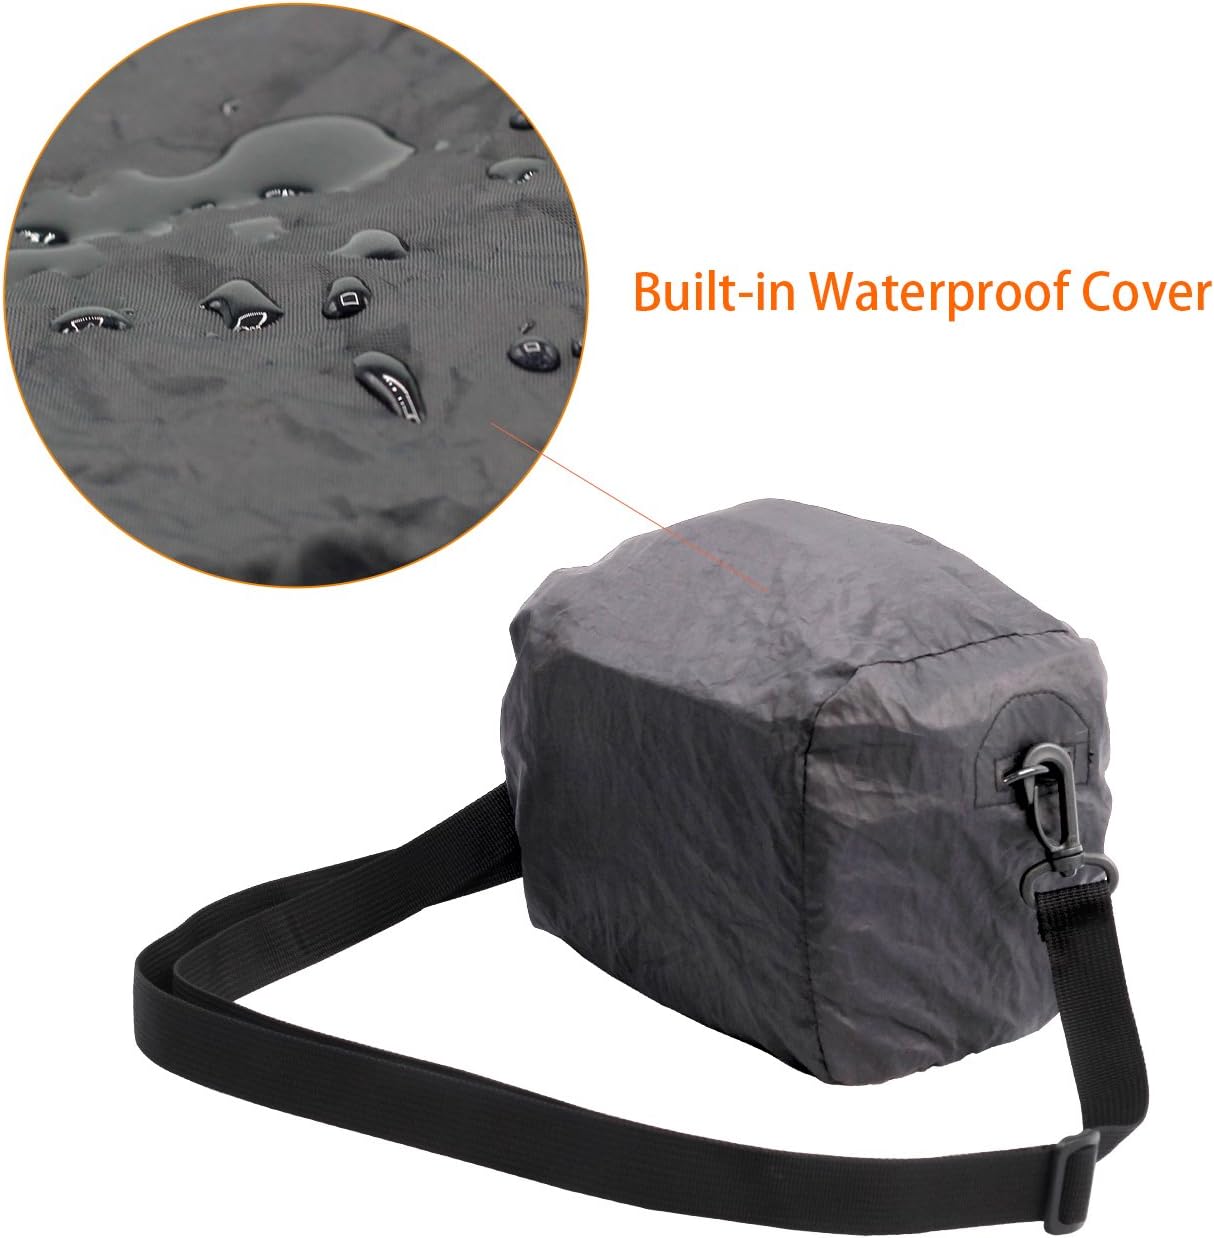 FOSOTO Waterproof (with Rain Cover) Camera Case Bag Compatible for Nikon Coolpix L340 B500 L330 L840 L830 L820 L620, Canon PowerShot SX410 SX420 SX530 M5 M100,Fujifilm XT20,Sony Alpha a6000 A6300 Nex7